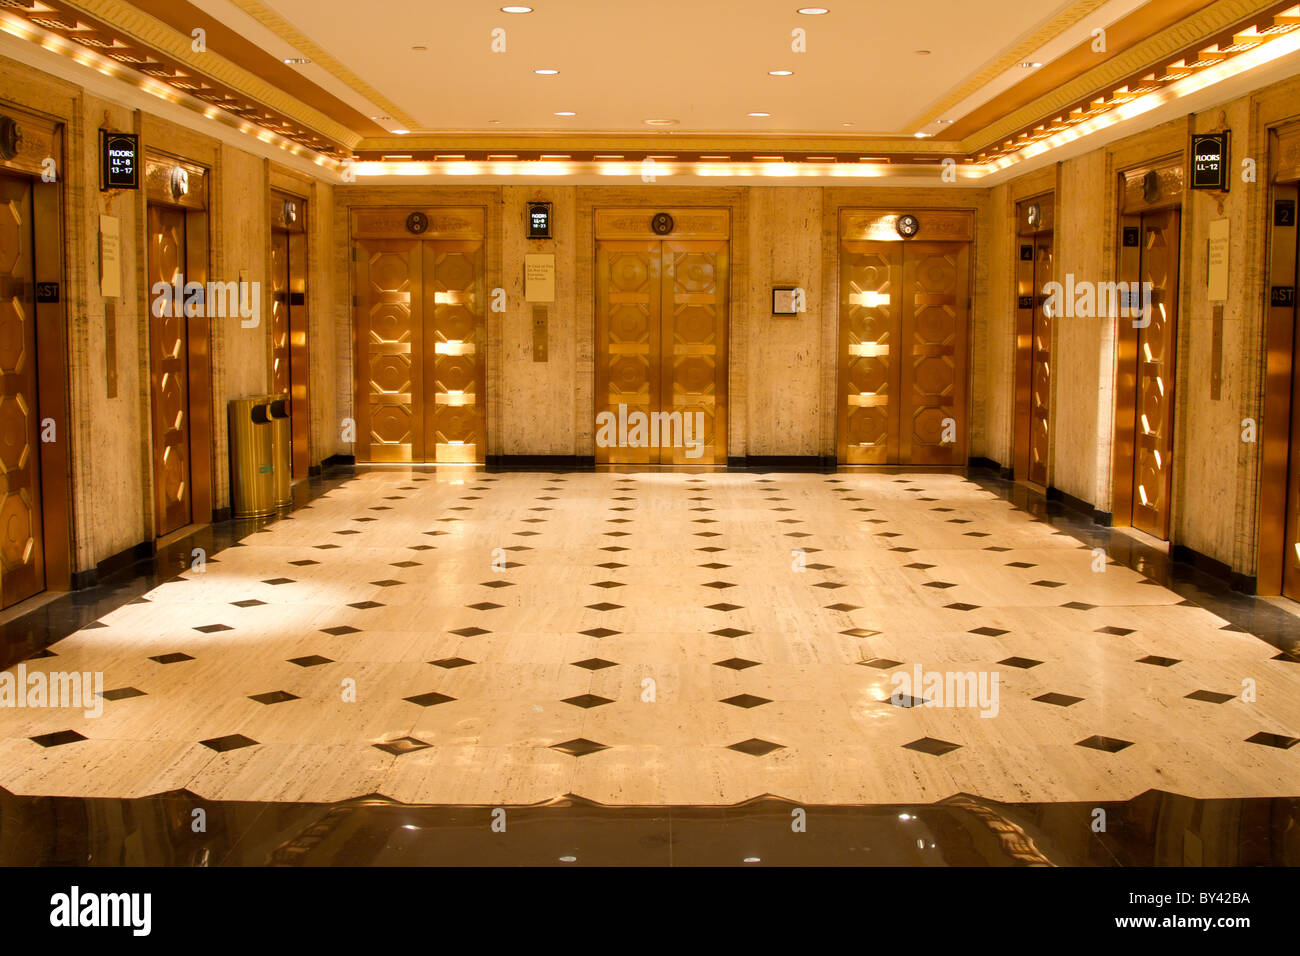 Building lobby with golden elevators Stock Photo